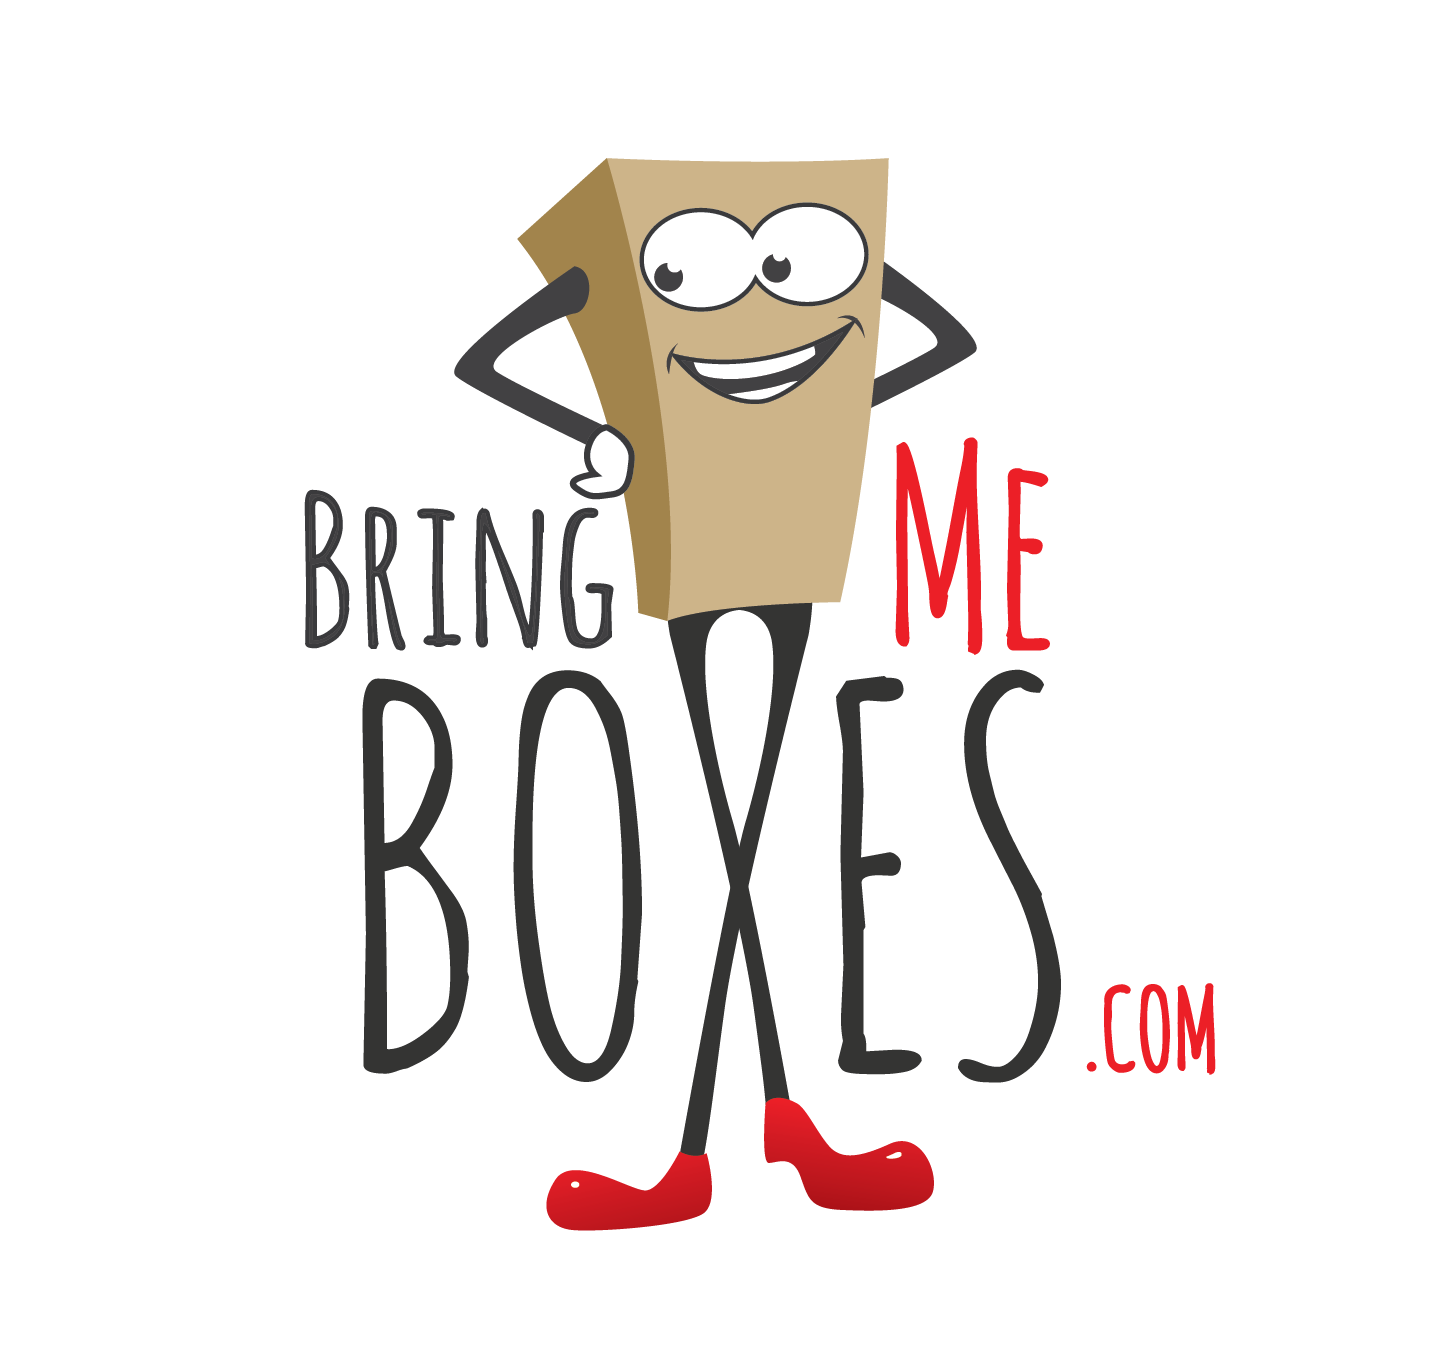 Bring Me Boxes